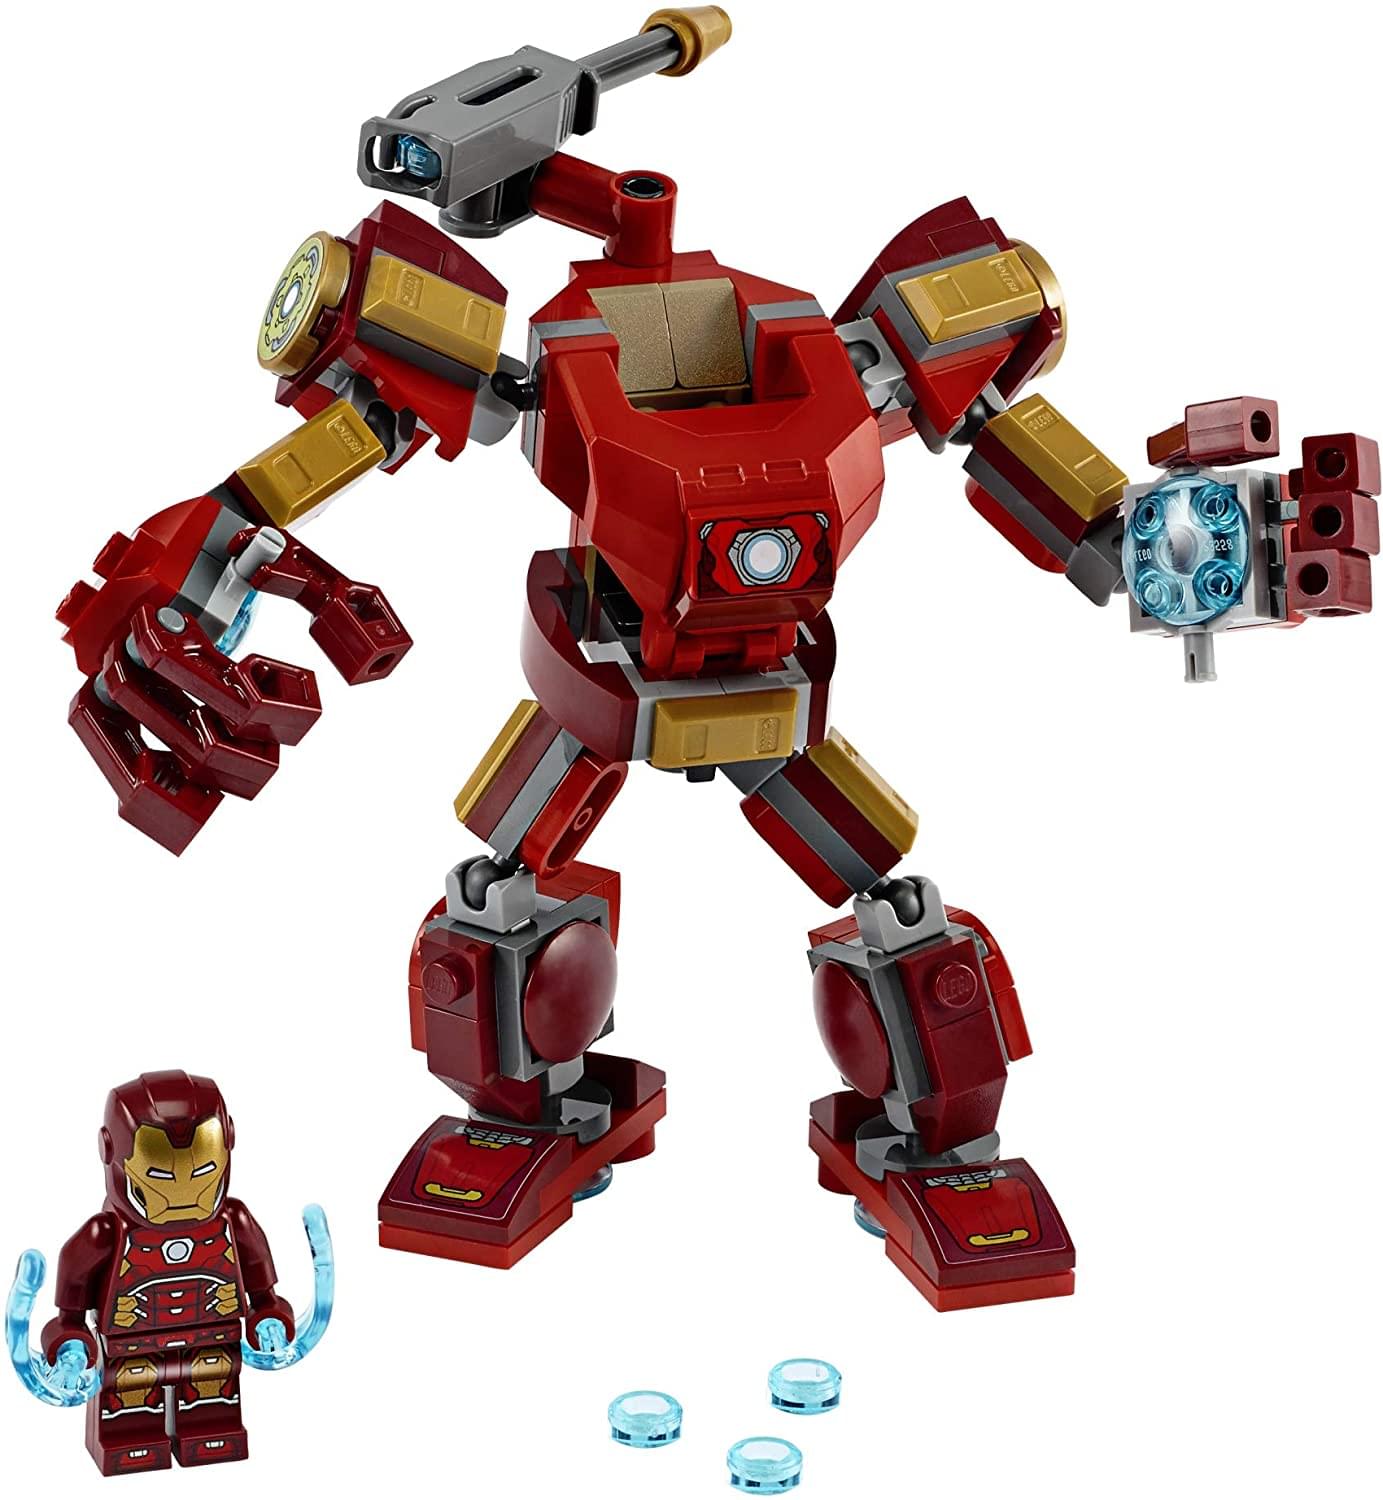 LEGO Marvel Avengers 76140 Iron Man Mech 148 Piece Building Kit